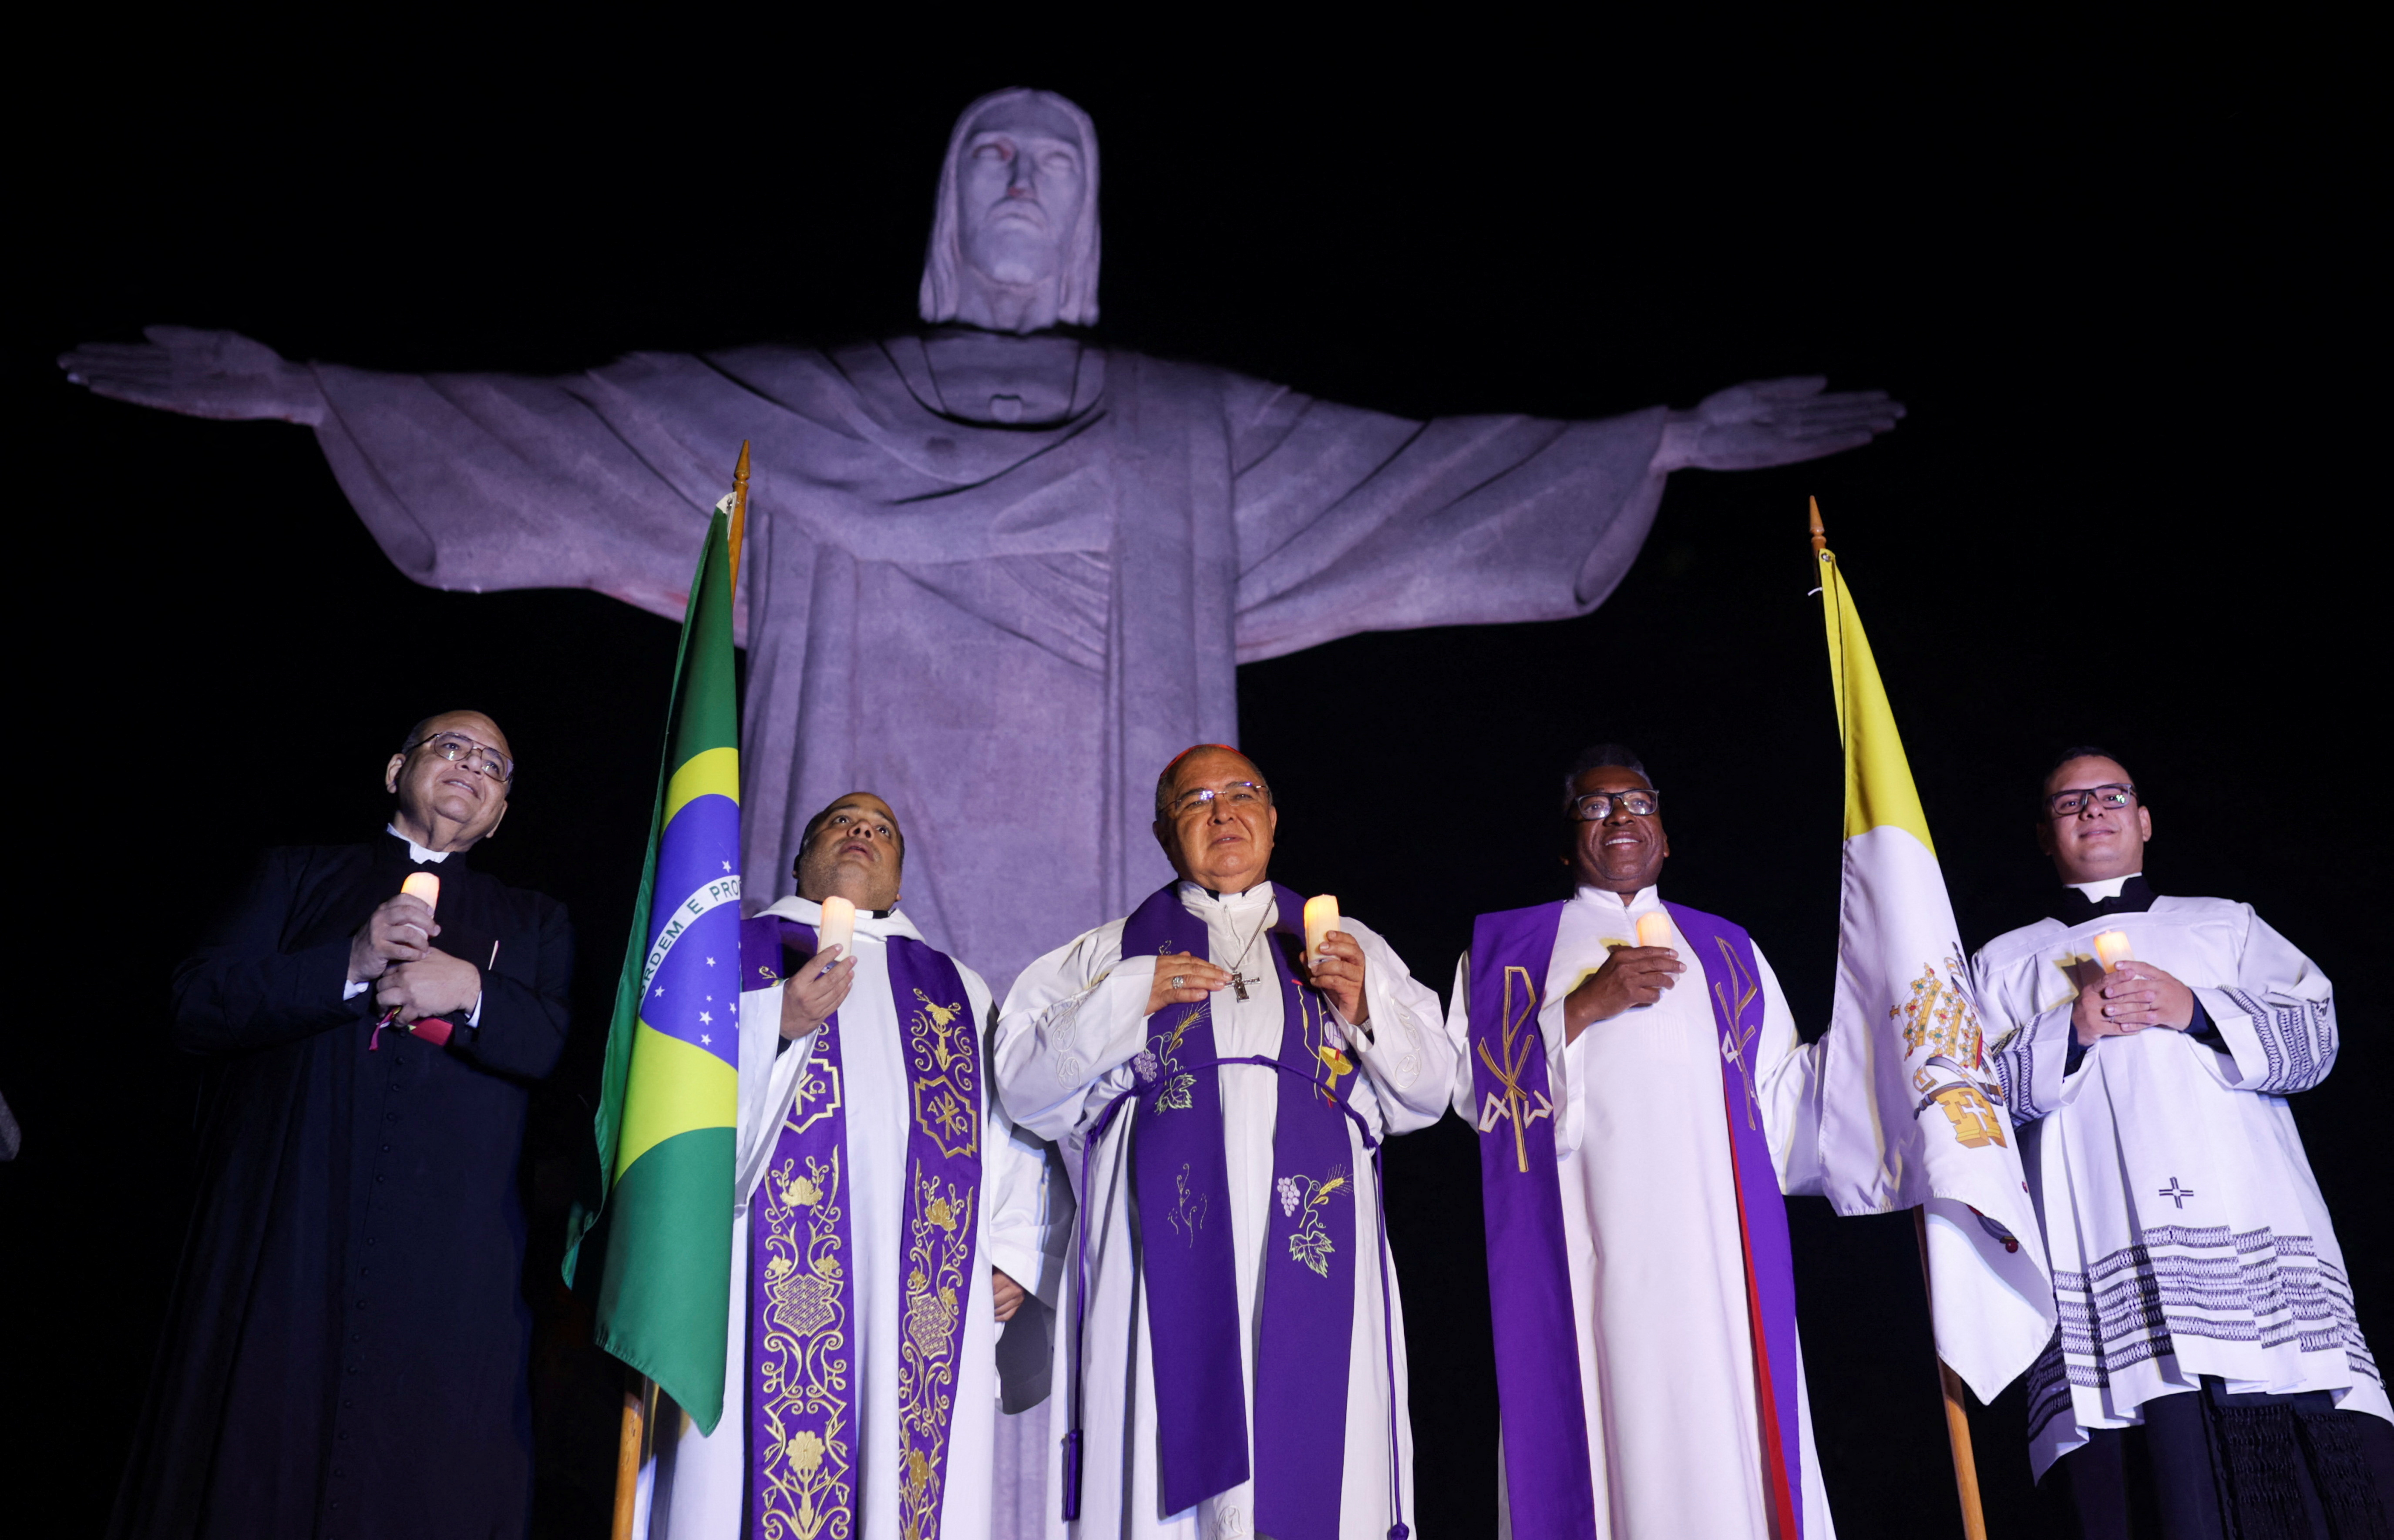 Rio de Janeiro's Archbishop Cardinal Orani Tempesta prays for Pope Francis's health in the Christ the Redeemer statue in Rio de Janeiro